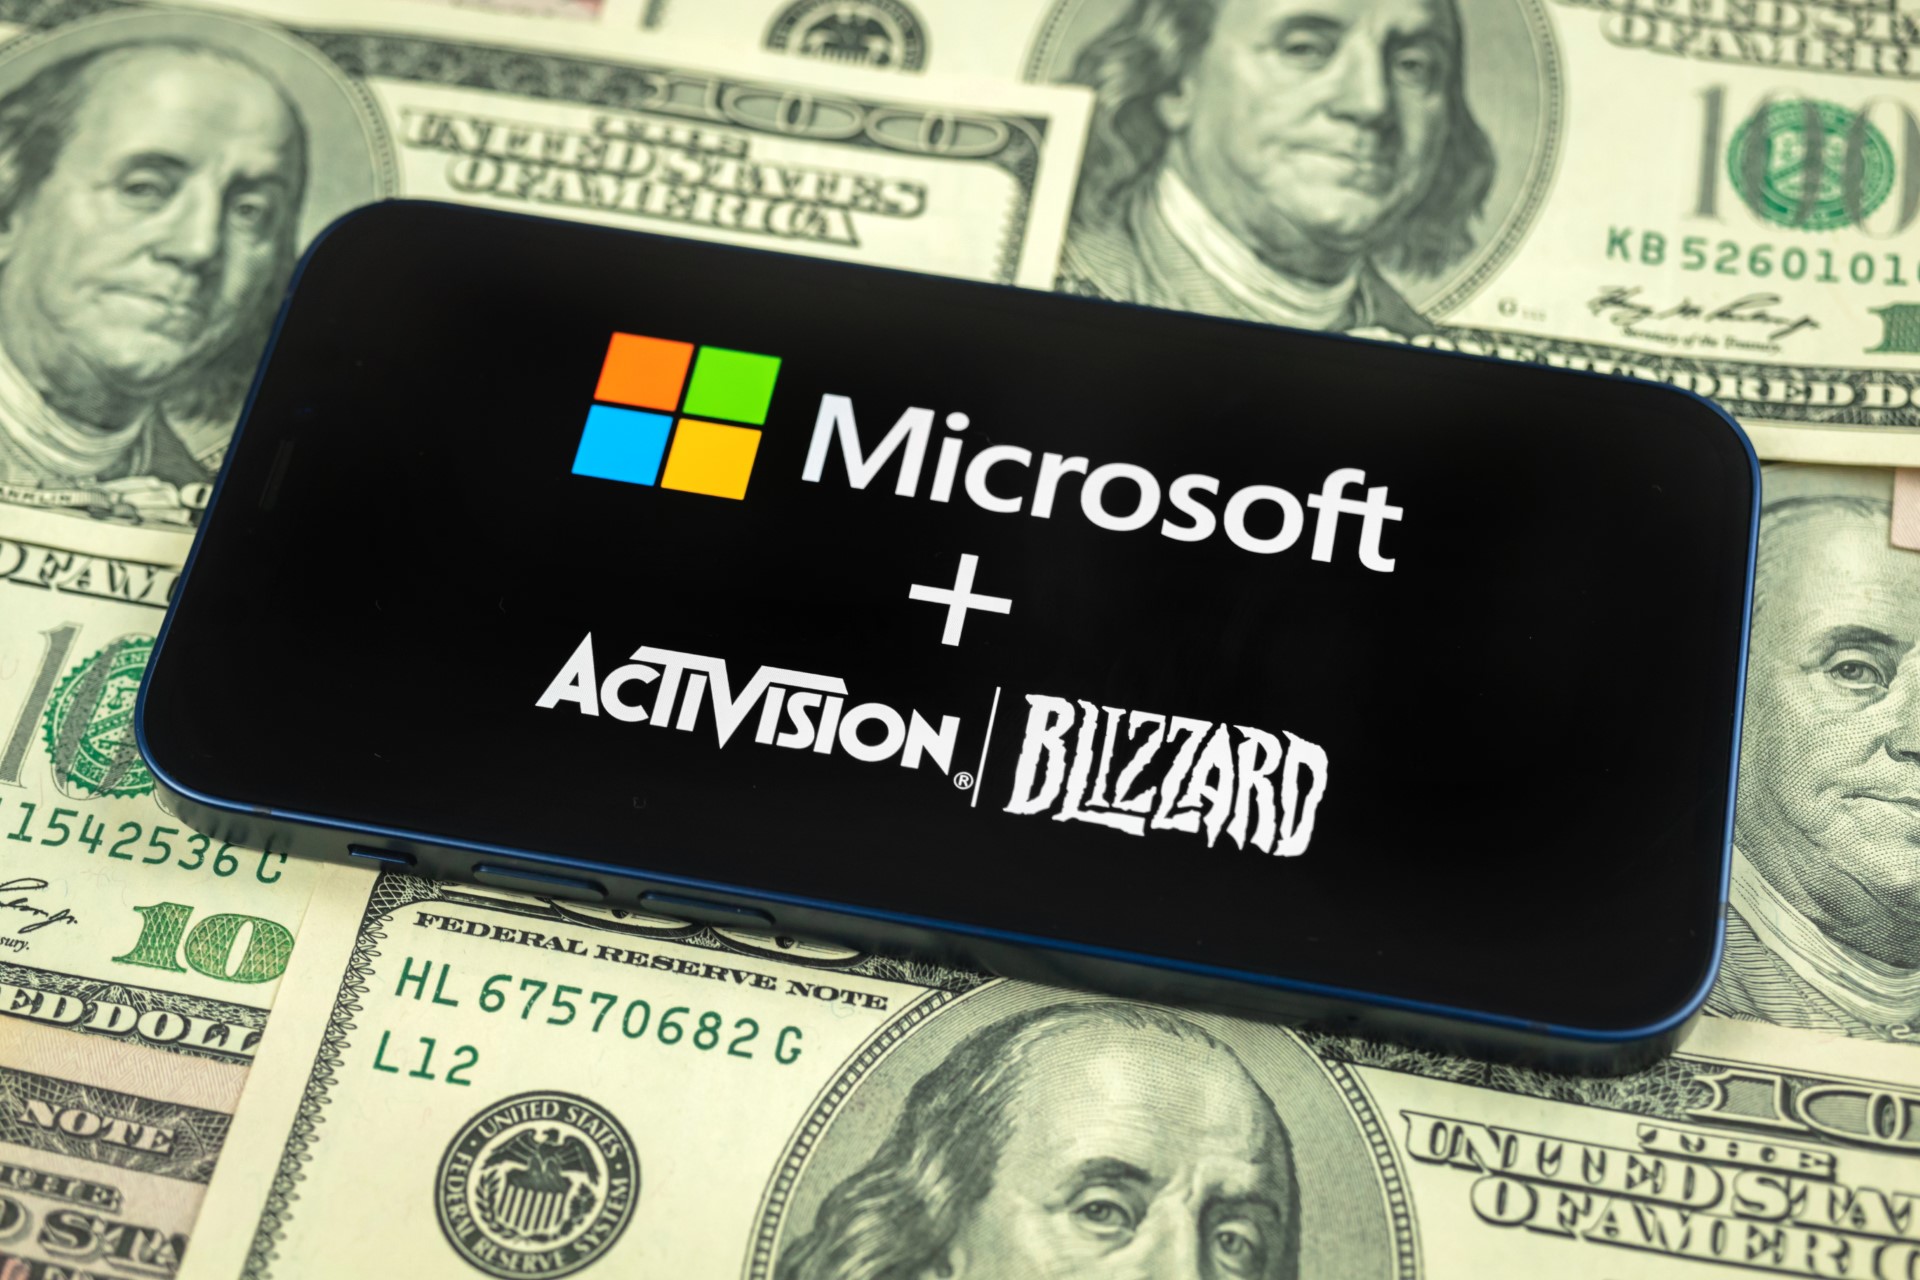 Microsoft makes case for Activision merger amid EU scrutiny